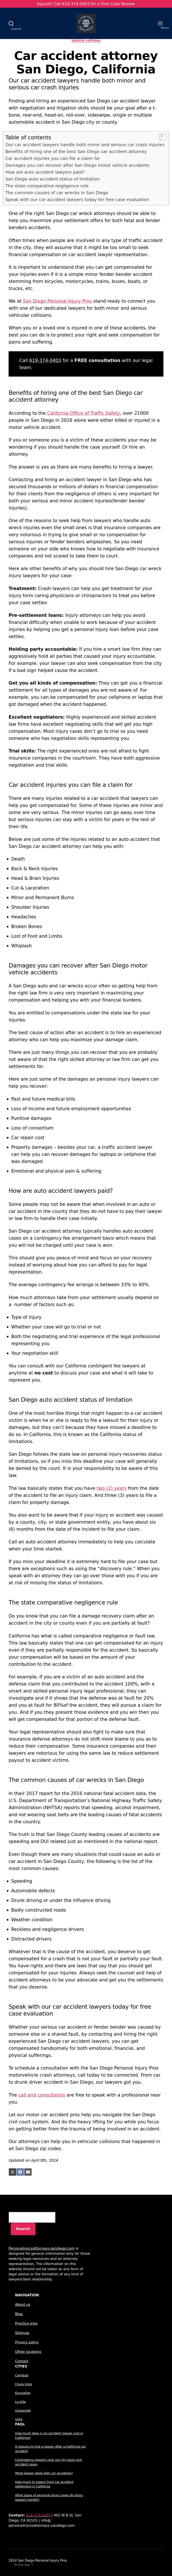 The San Diego Personal Injury Law Pros - San Diego CA Lawyers